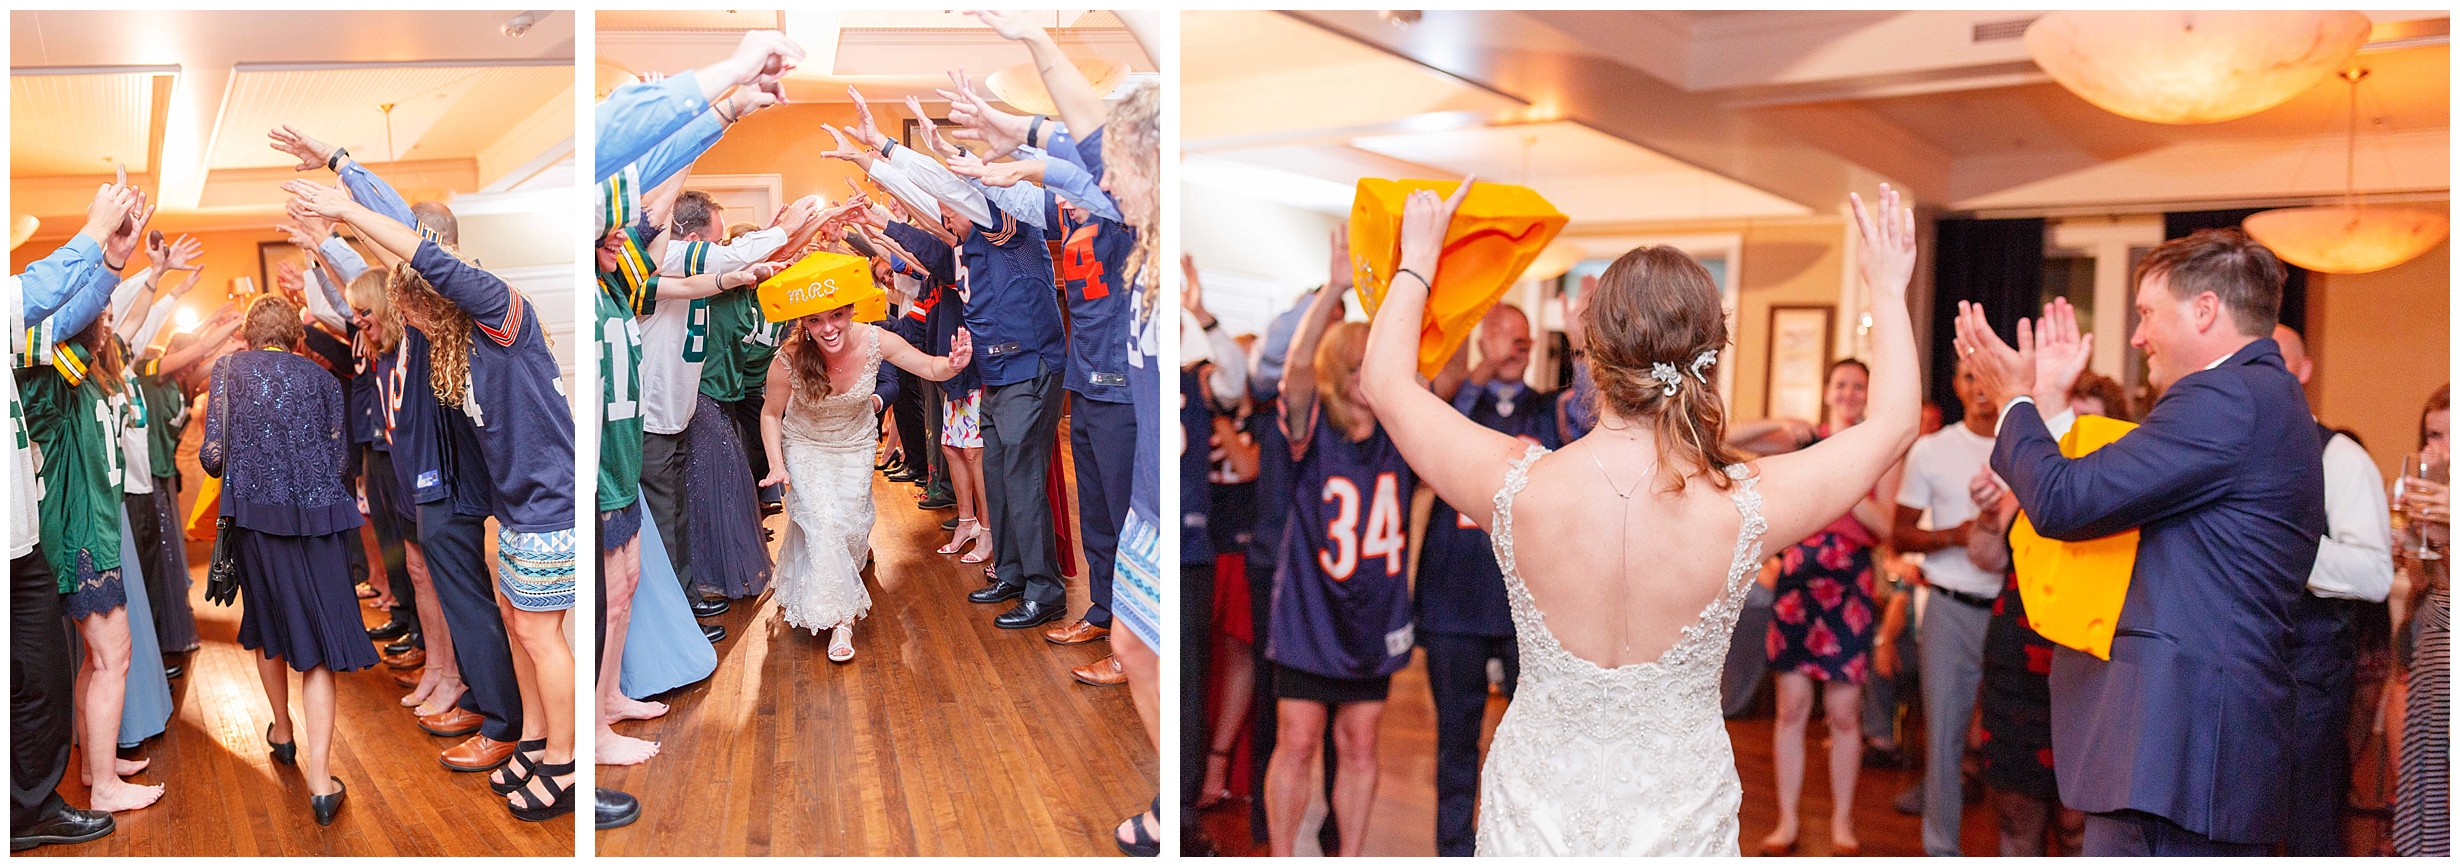 packers vs bears wedding reception gag